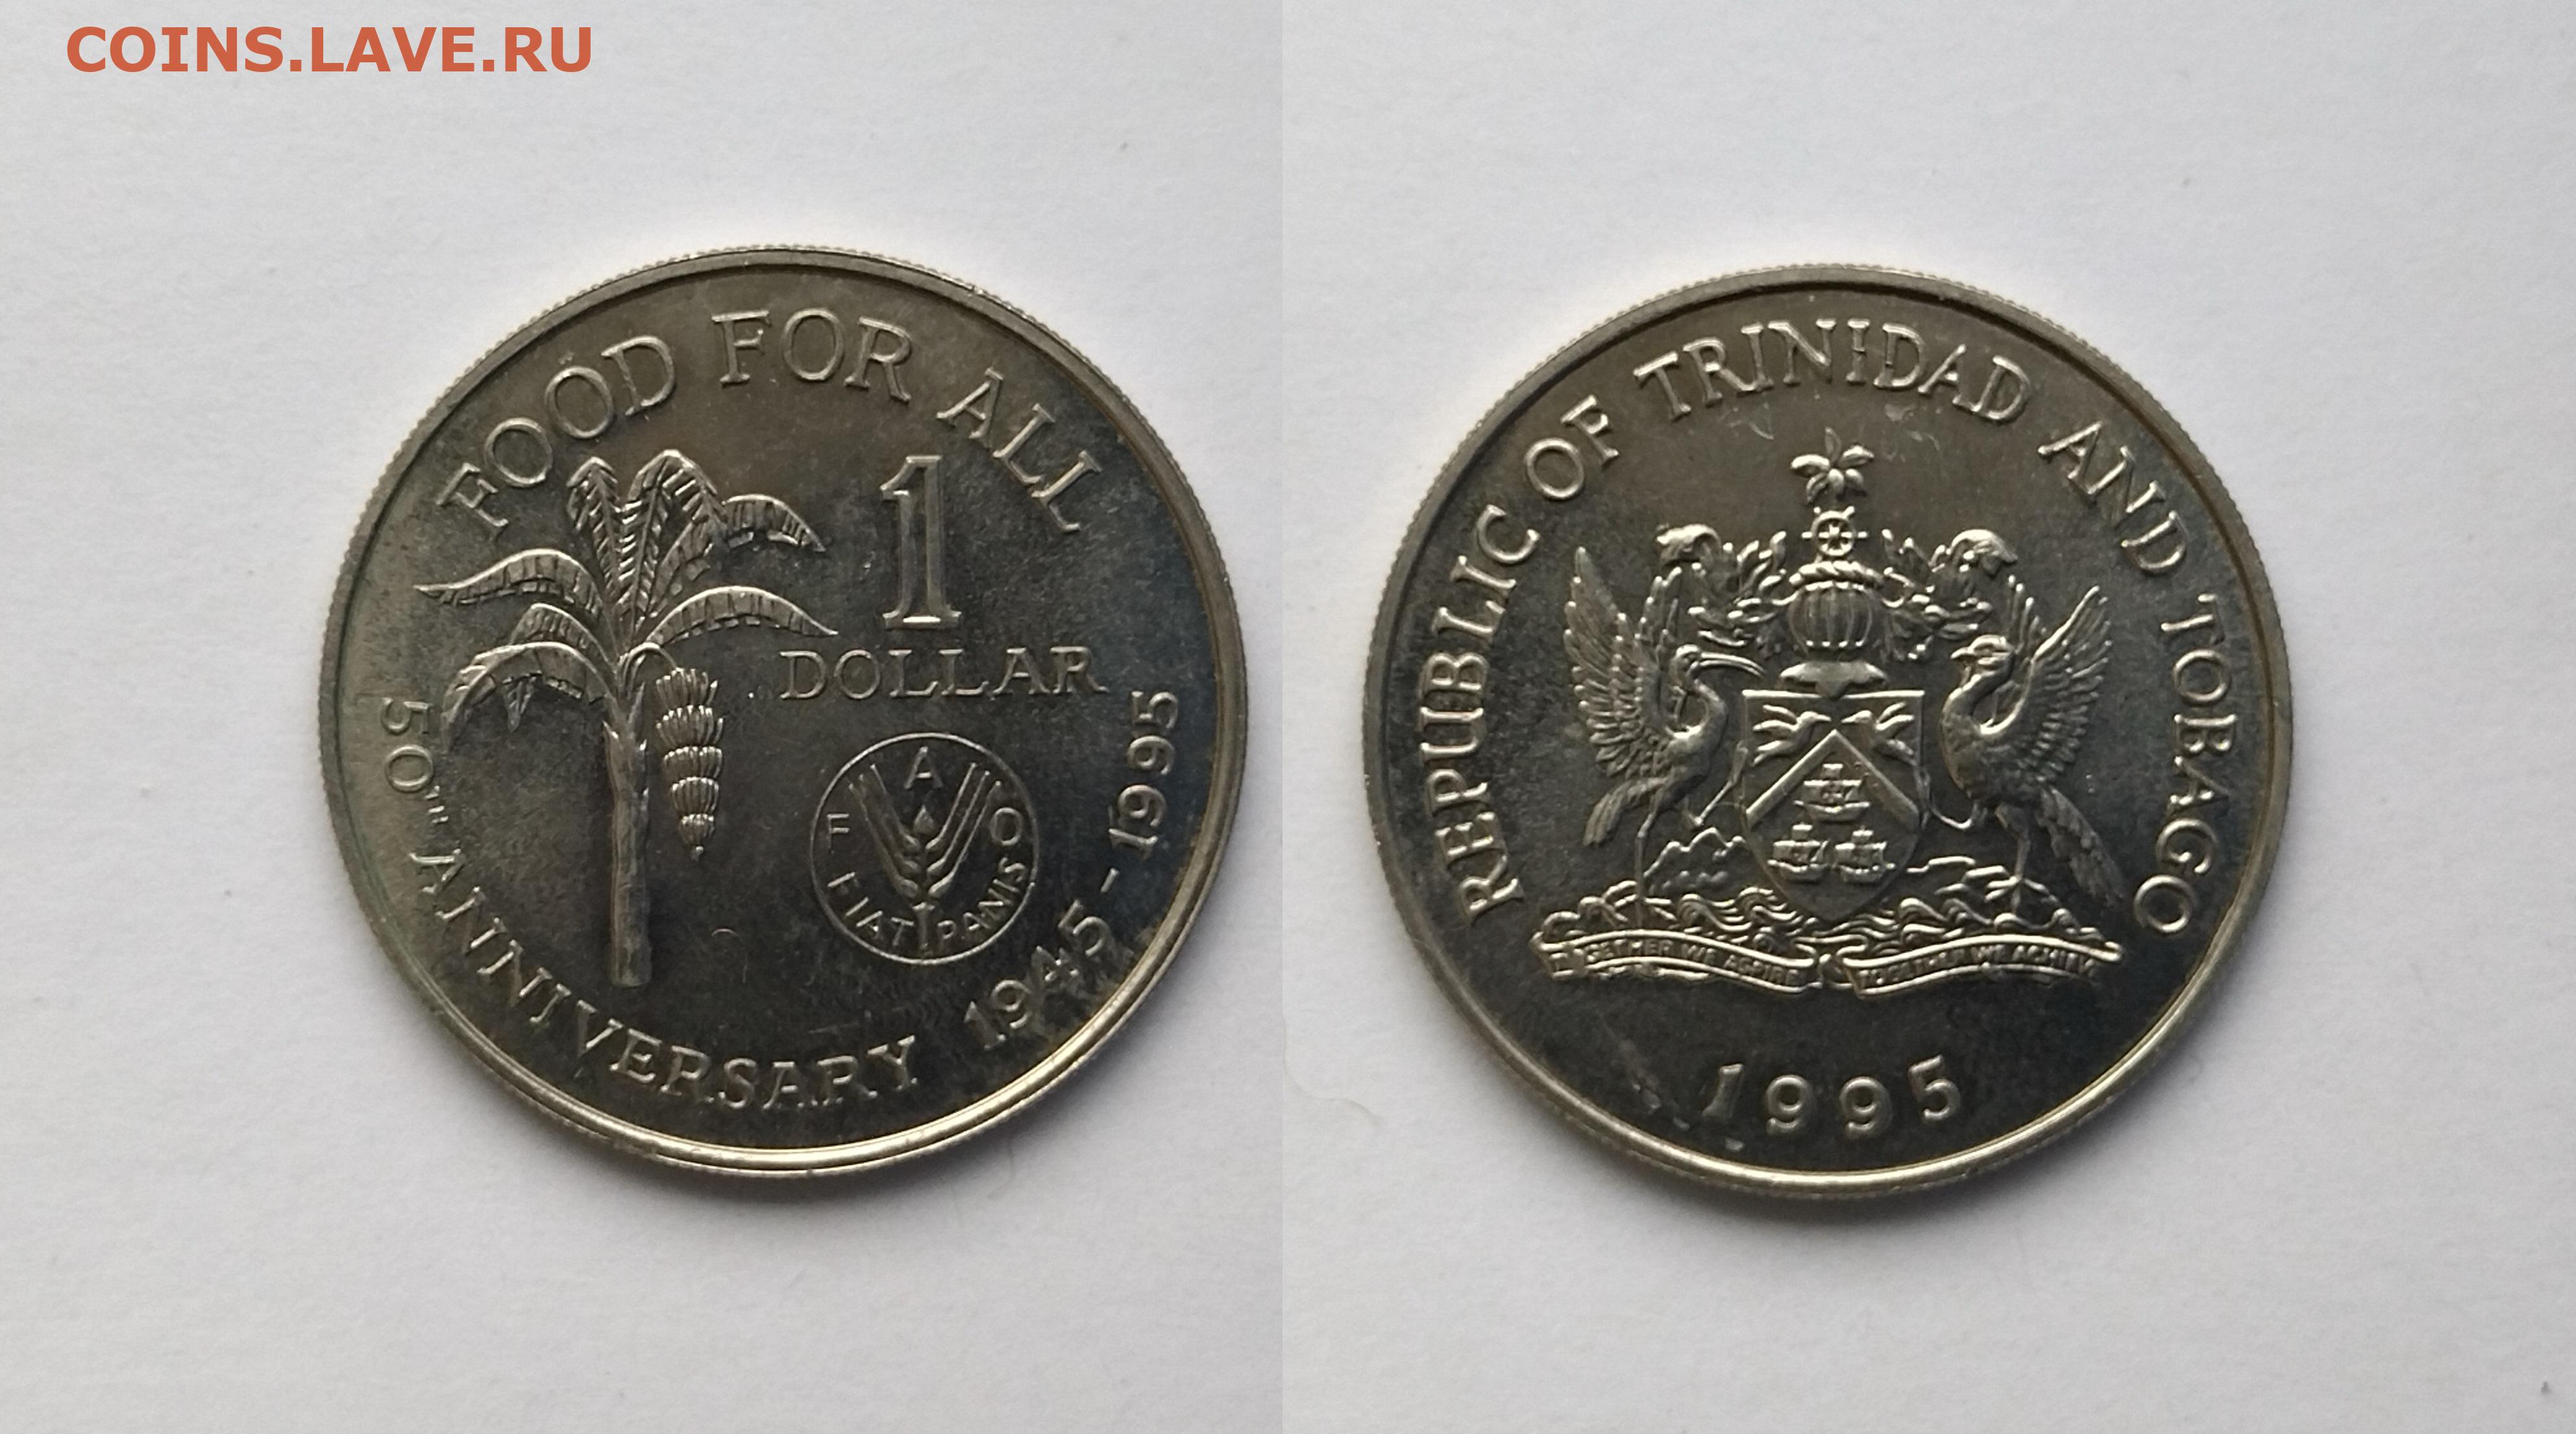 Доллар в 1995 году в рублях. Доллар 1995 года. 1 Доллар Тринидад и Тобаго 1964 Королева. Тринидад и Тобаго, 1 доллар, 1969, продовольственная программа - ФАО.